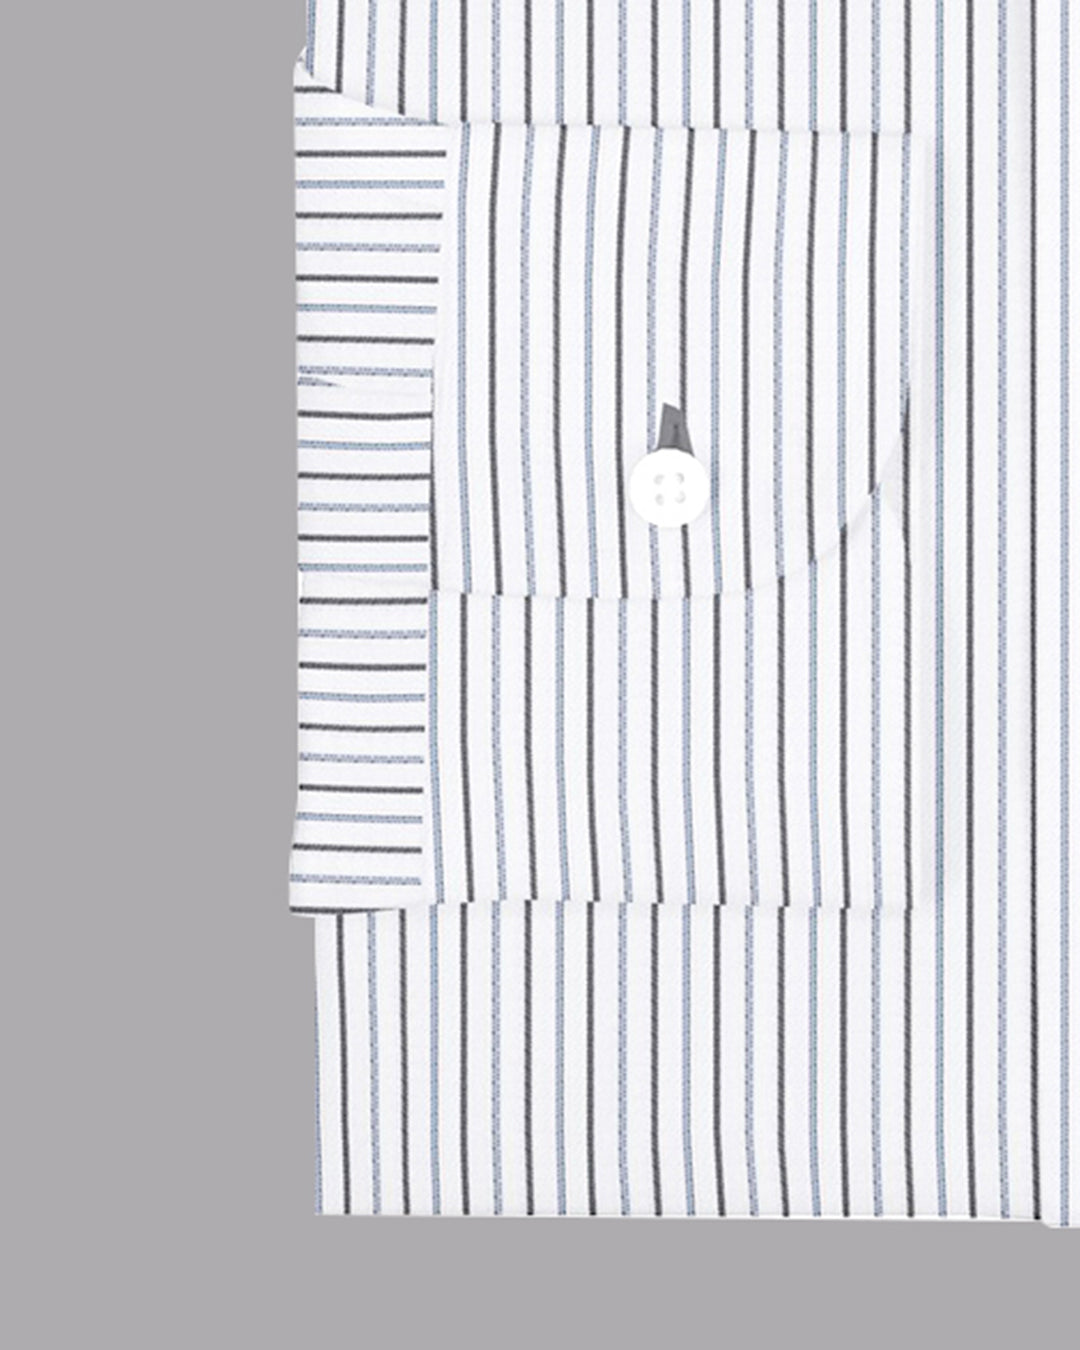 Cotton Linen: Black Blue Alternate stripes On White